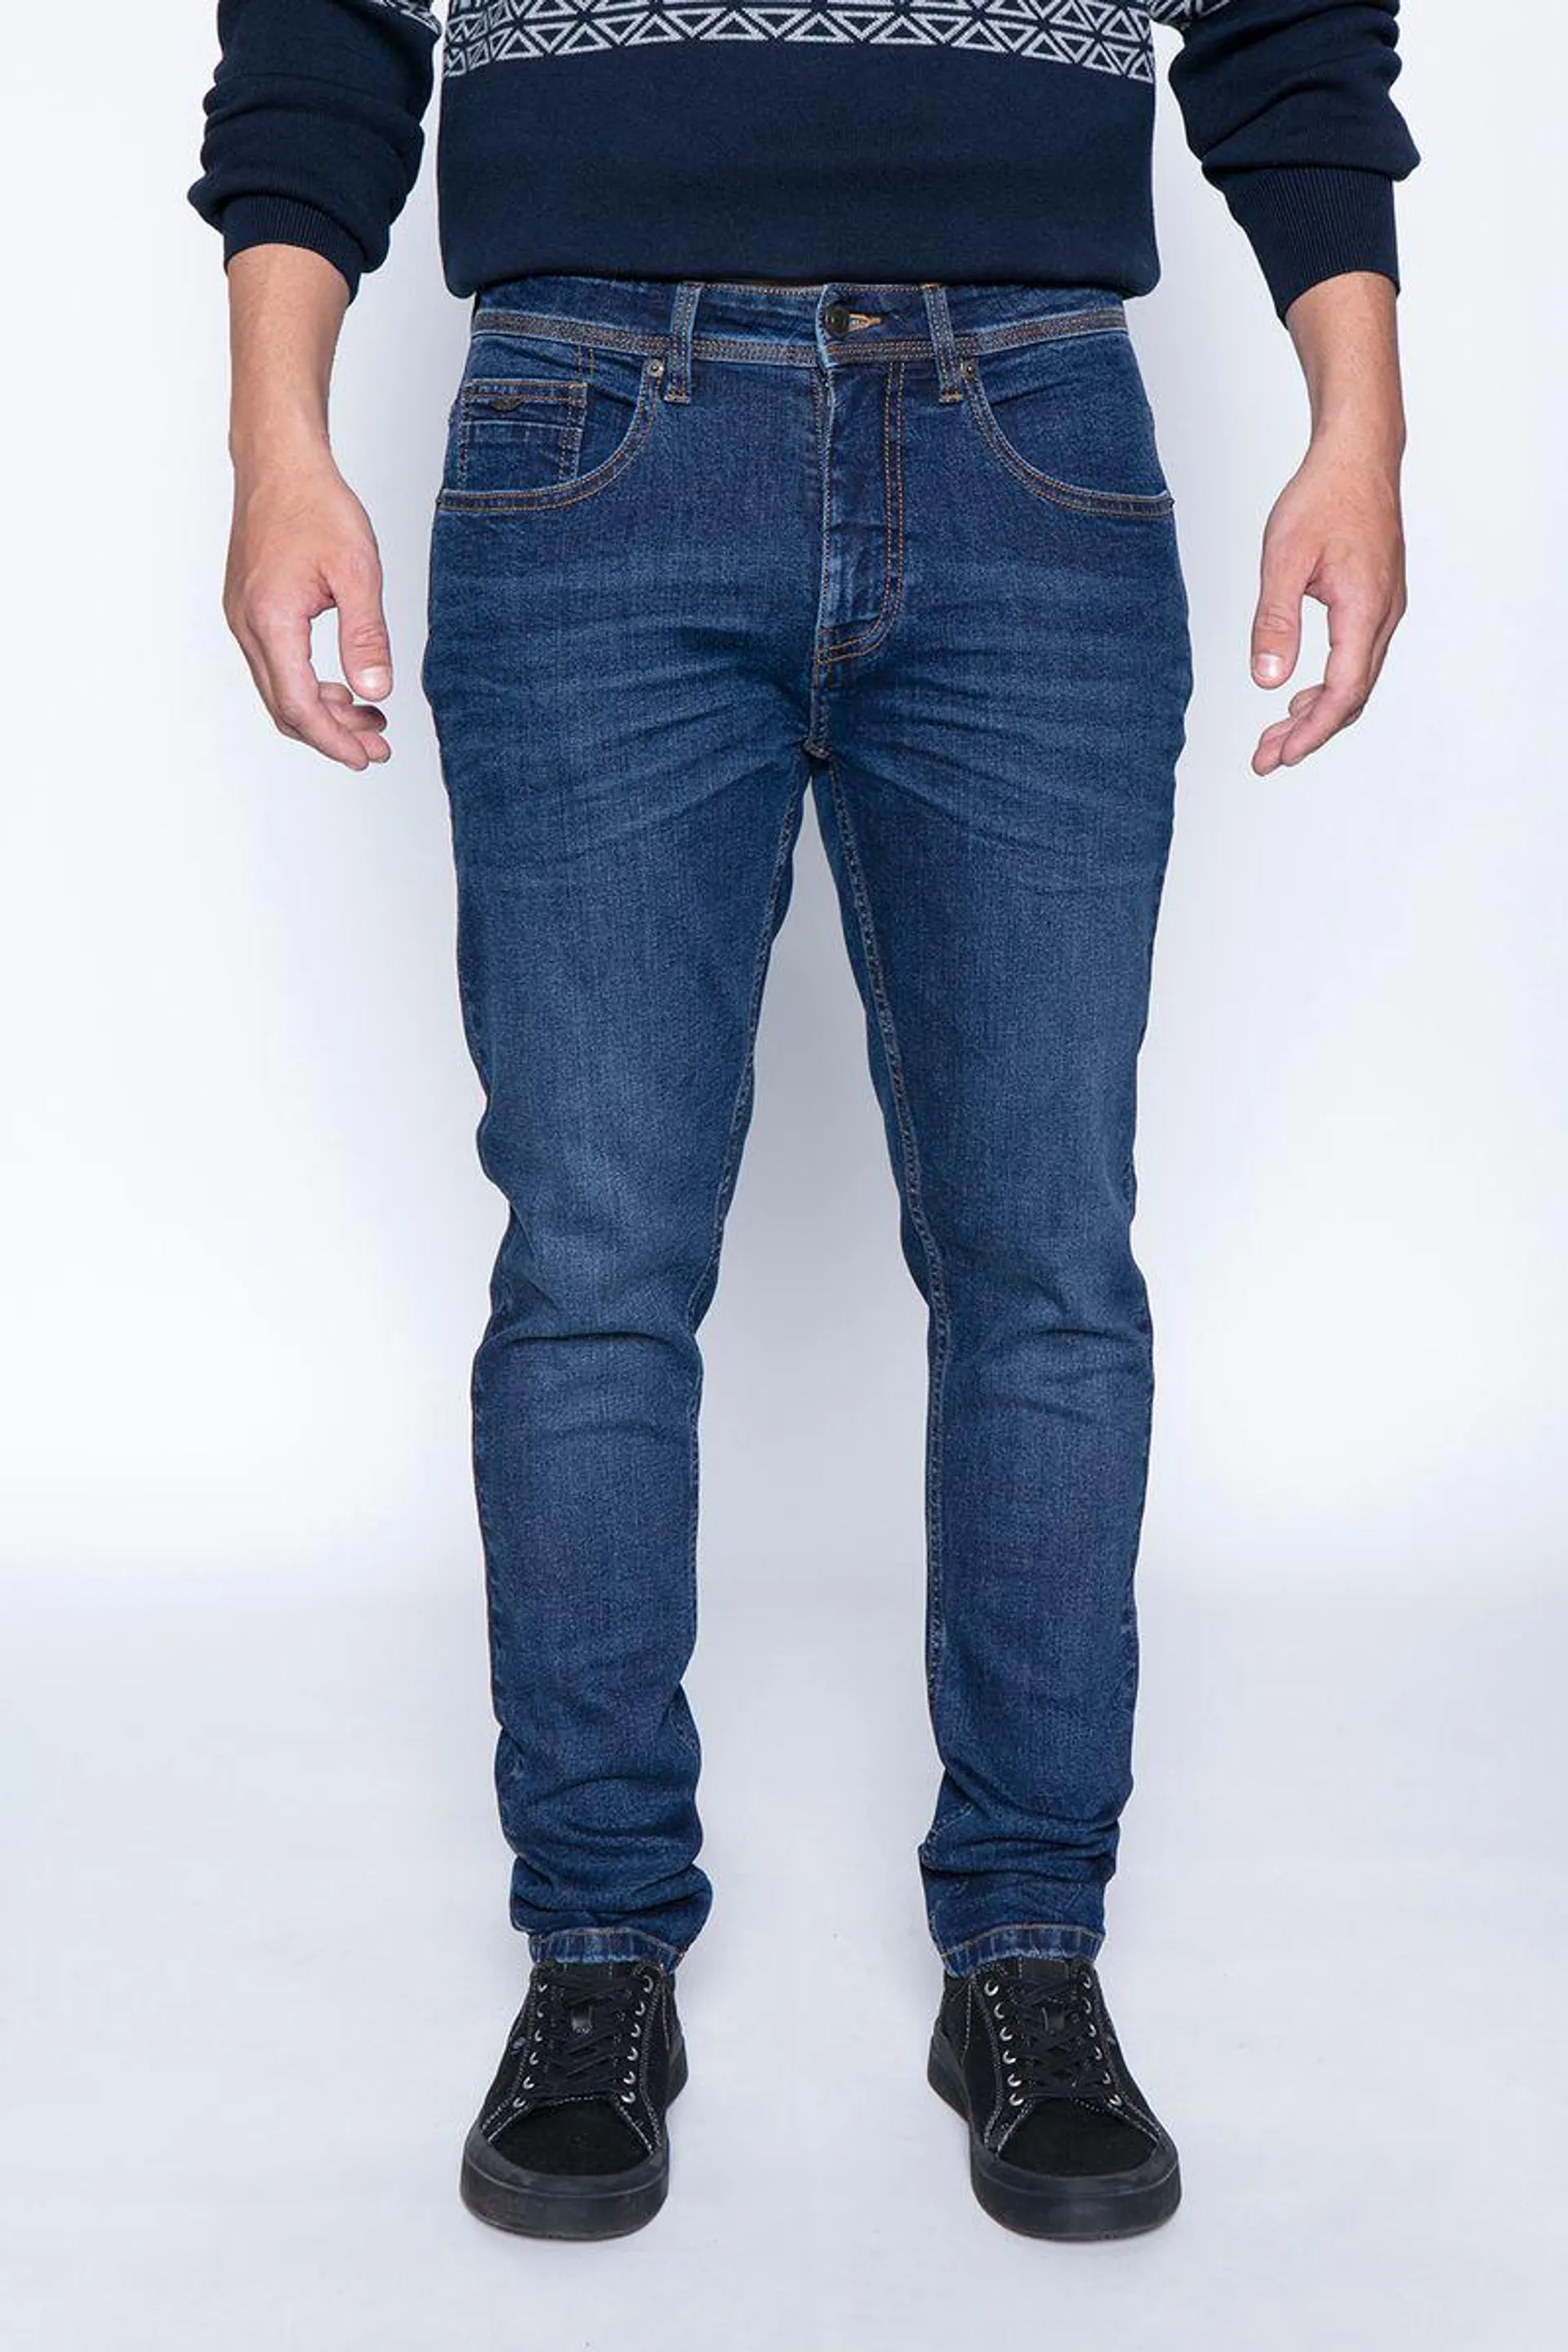 Jeans Básico Auburn Fj Indigo